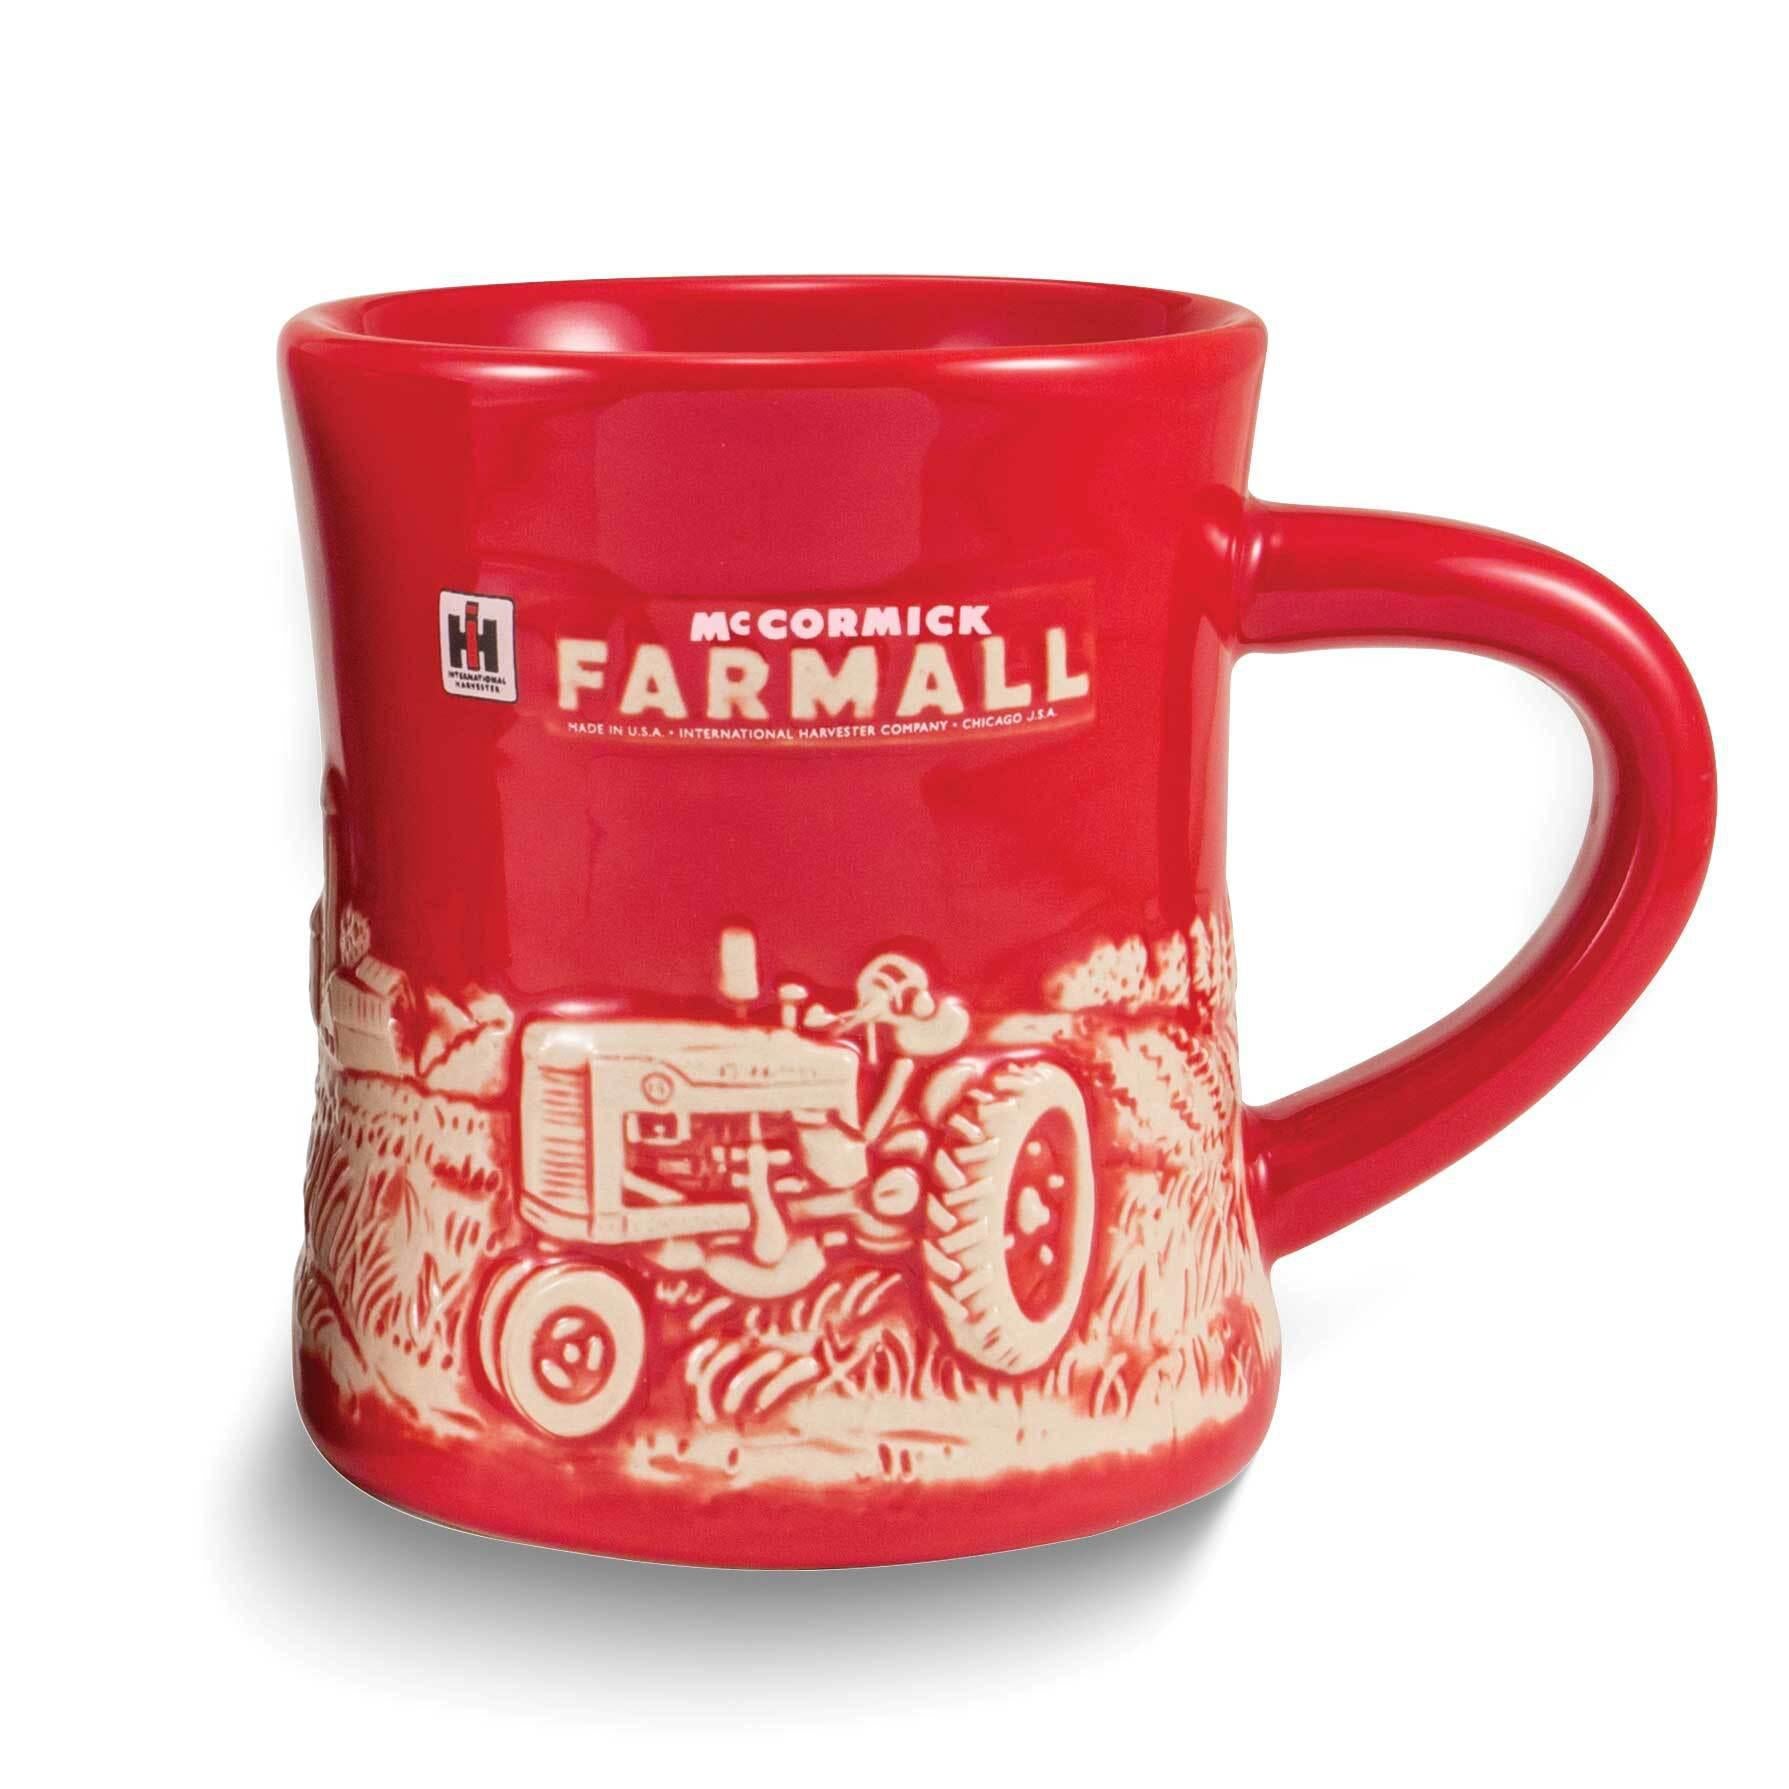 McCormick Farmall Diner Mug